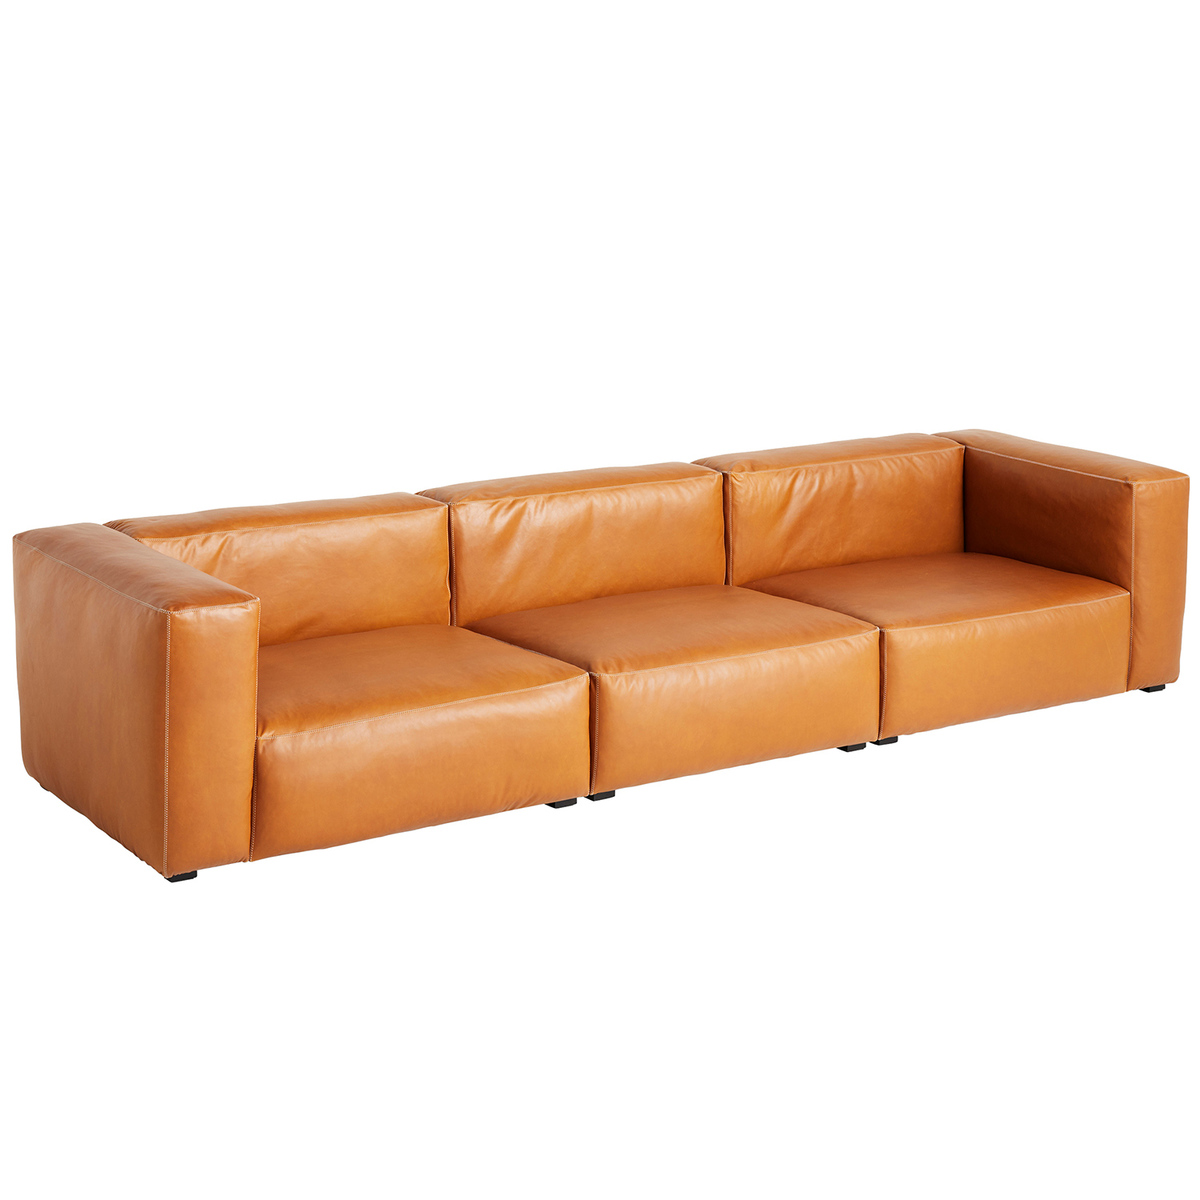 HAY Mags Soft sohva 3-ist/329,5 cm, korkea käsinoja, Sense 250 nahka